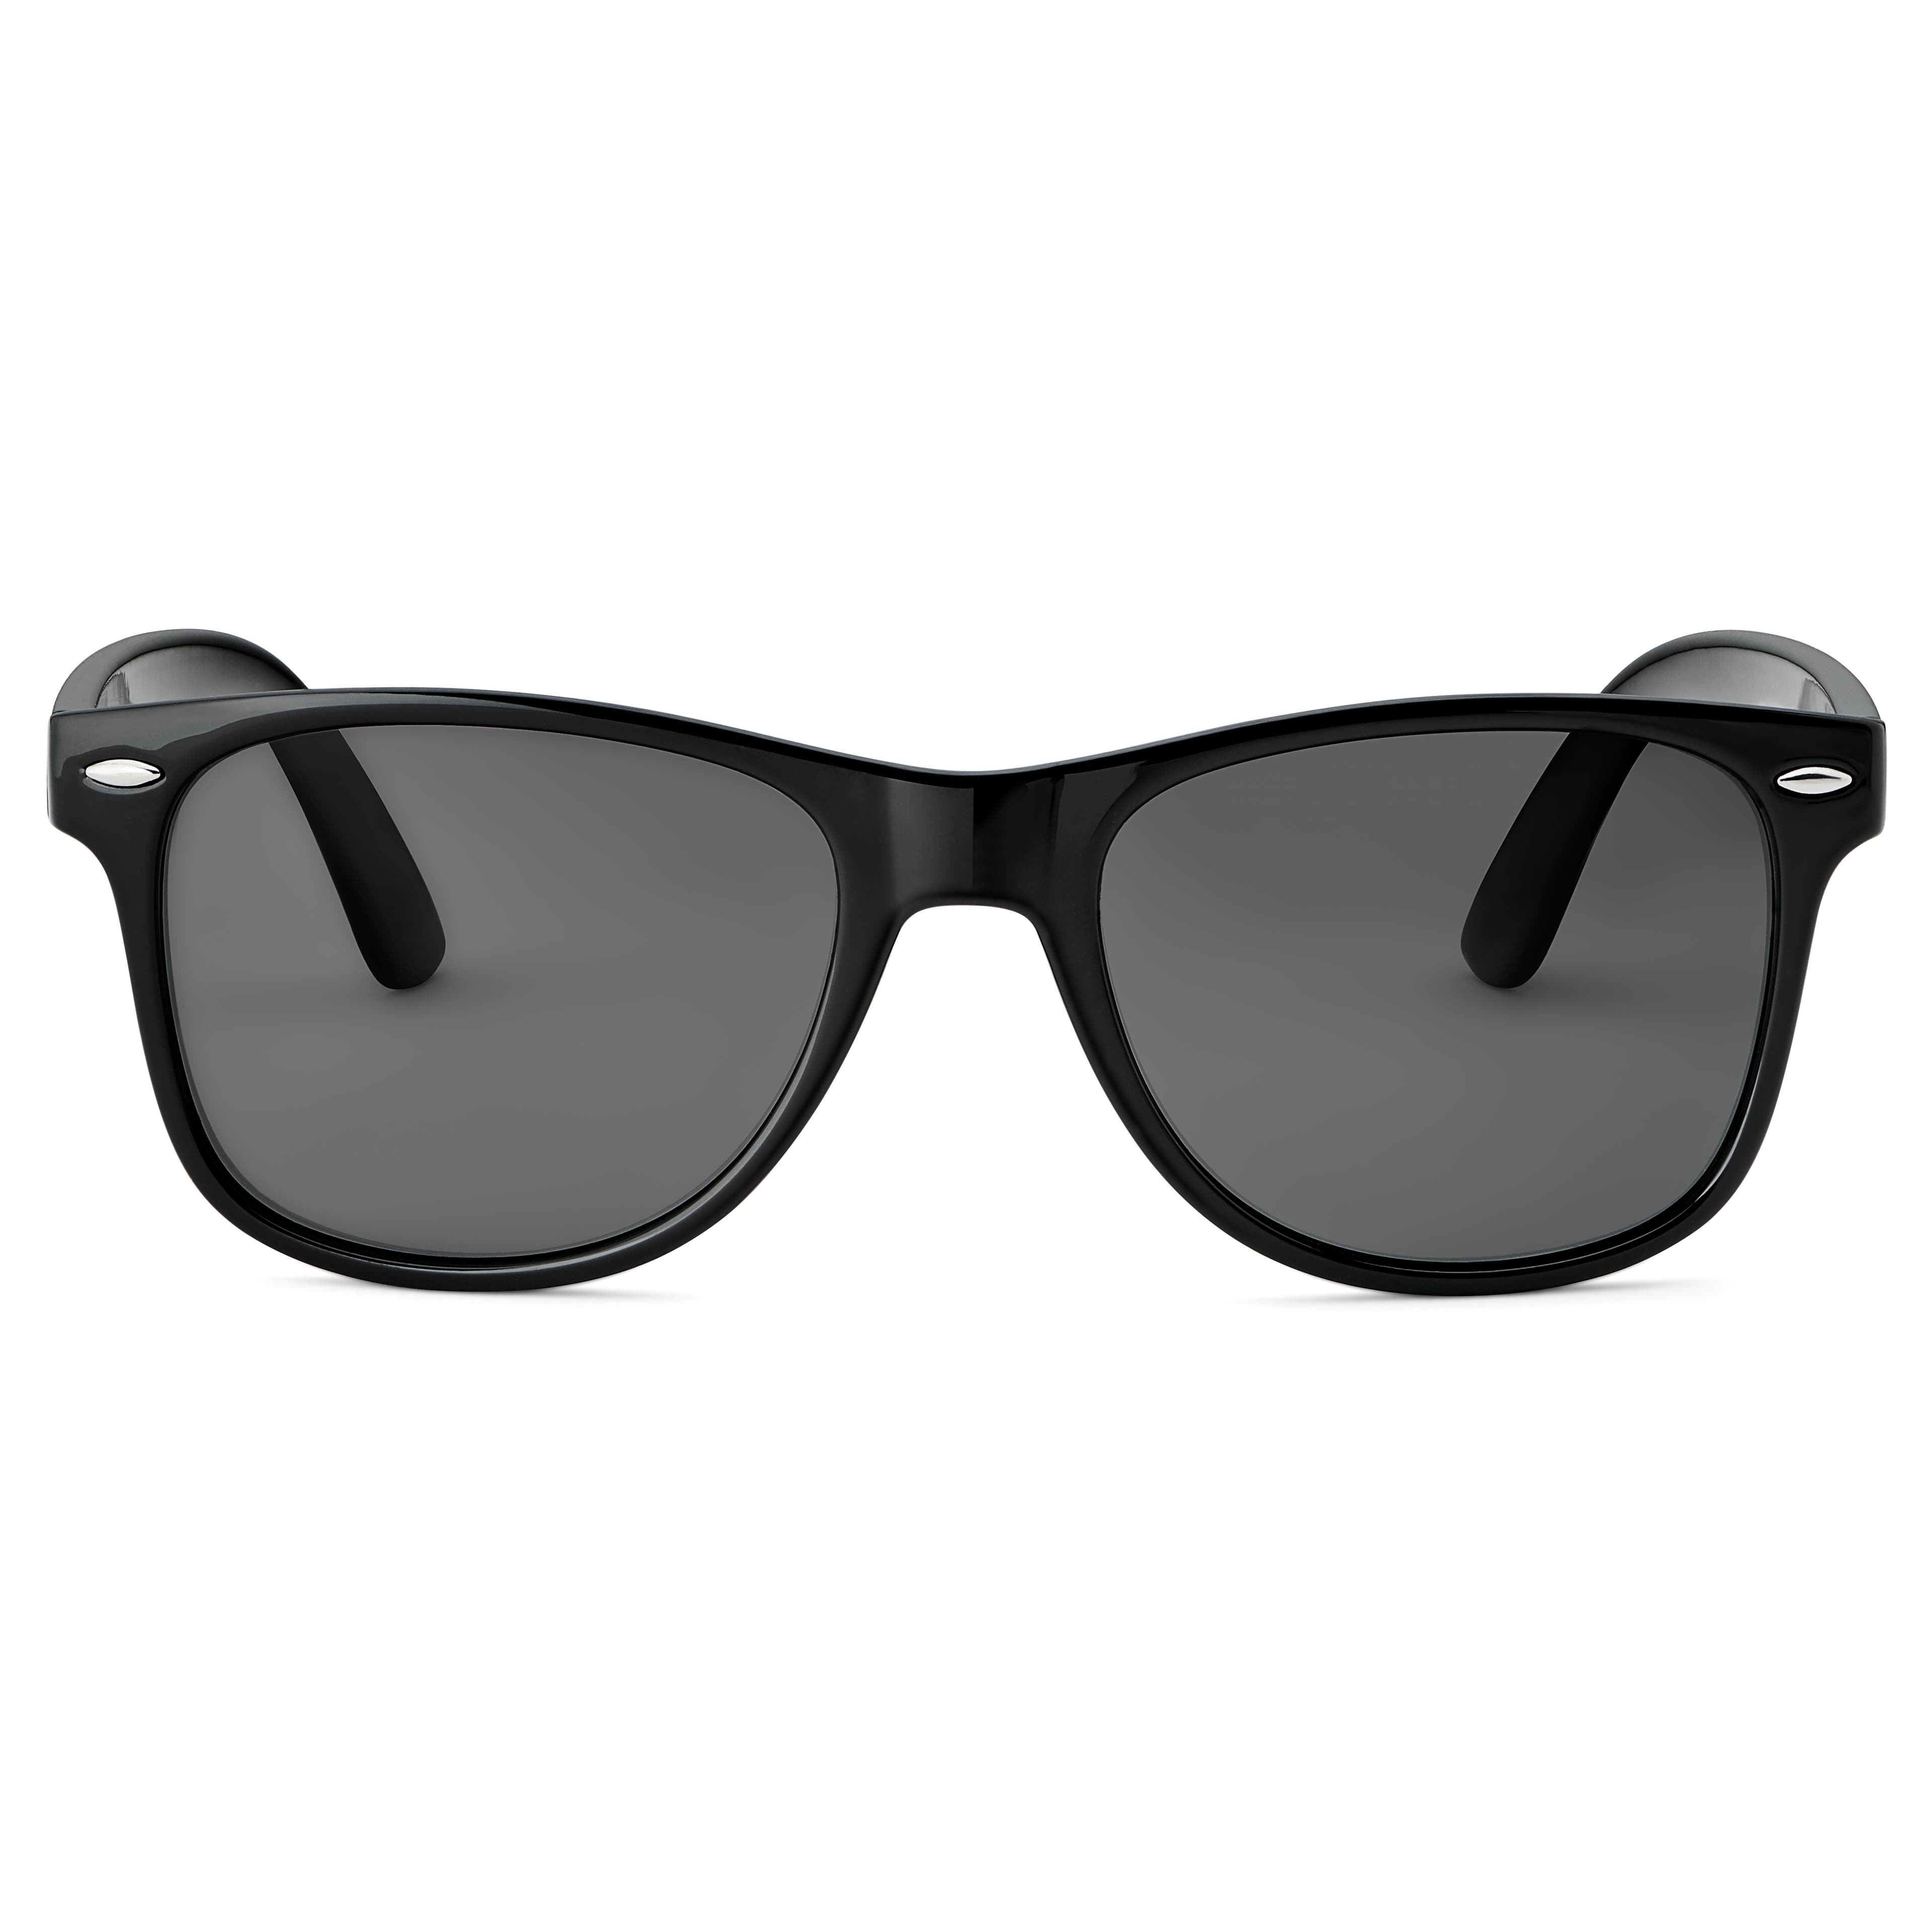 Black Polarized Retro Sunglasses